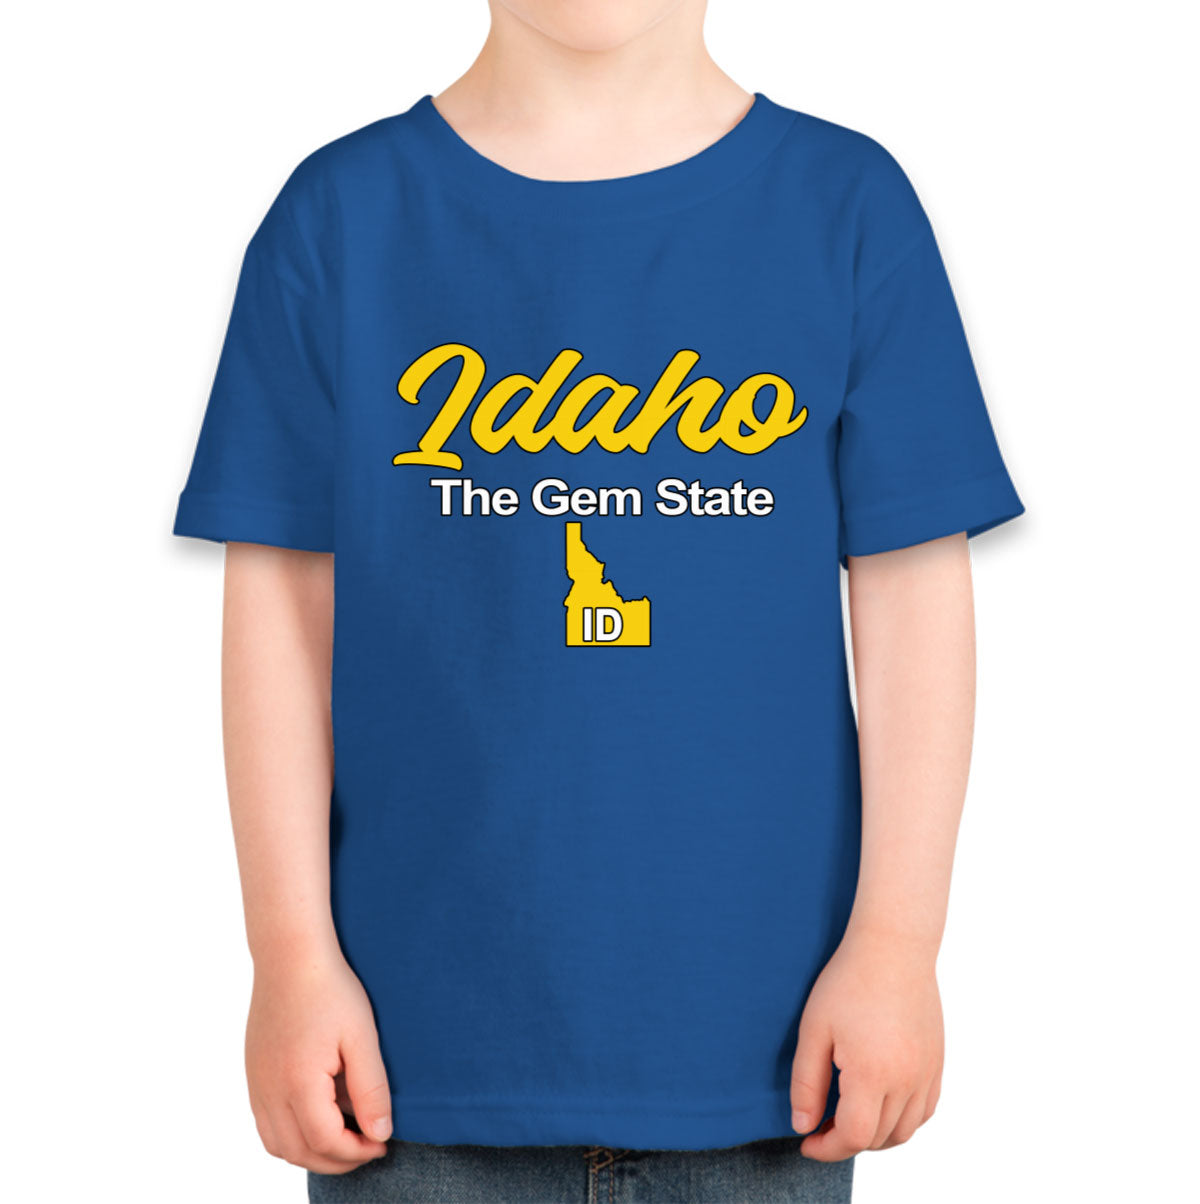 Idaho The Gem State Toddler T-shirt